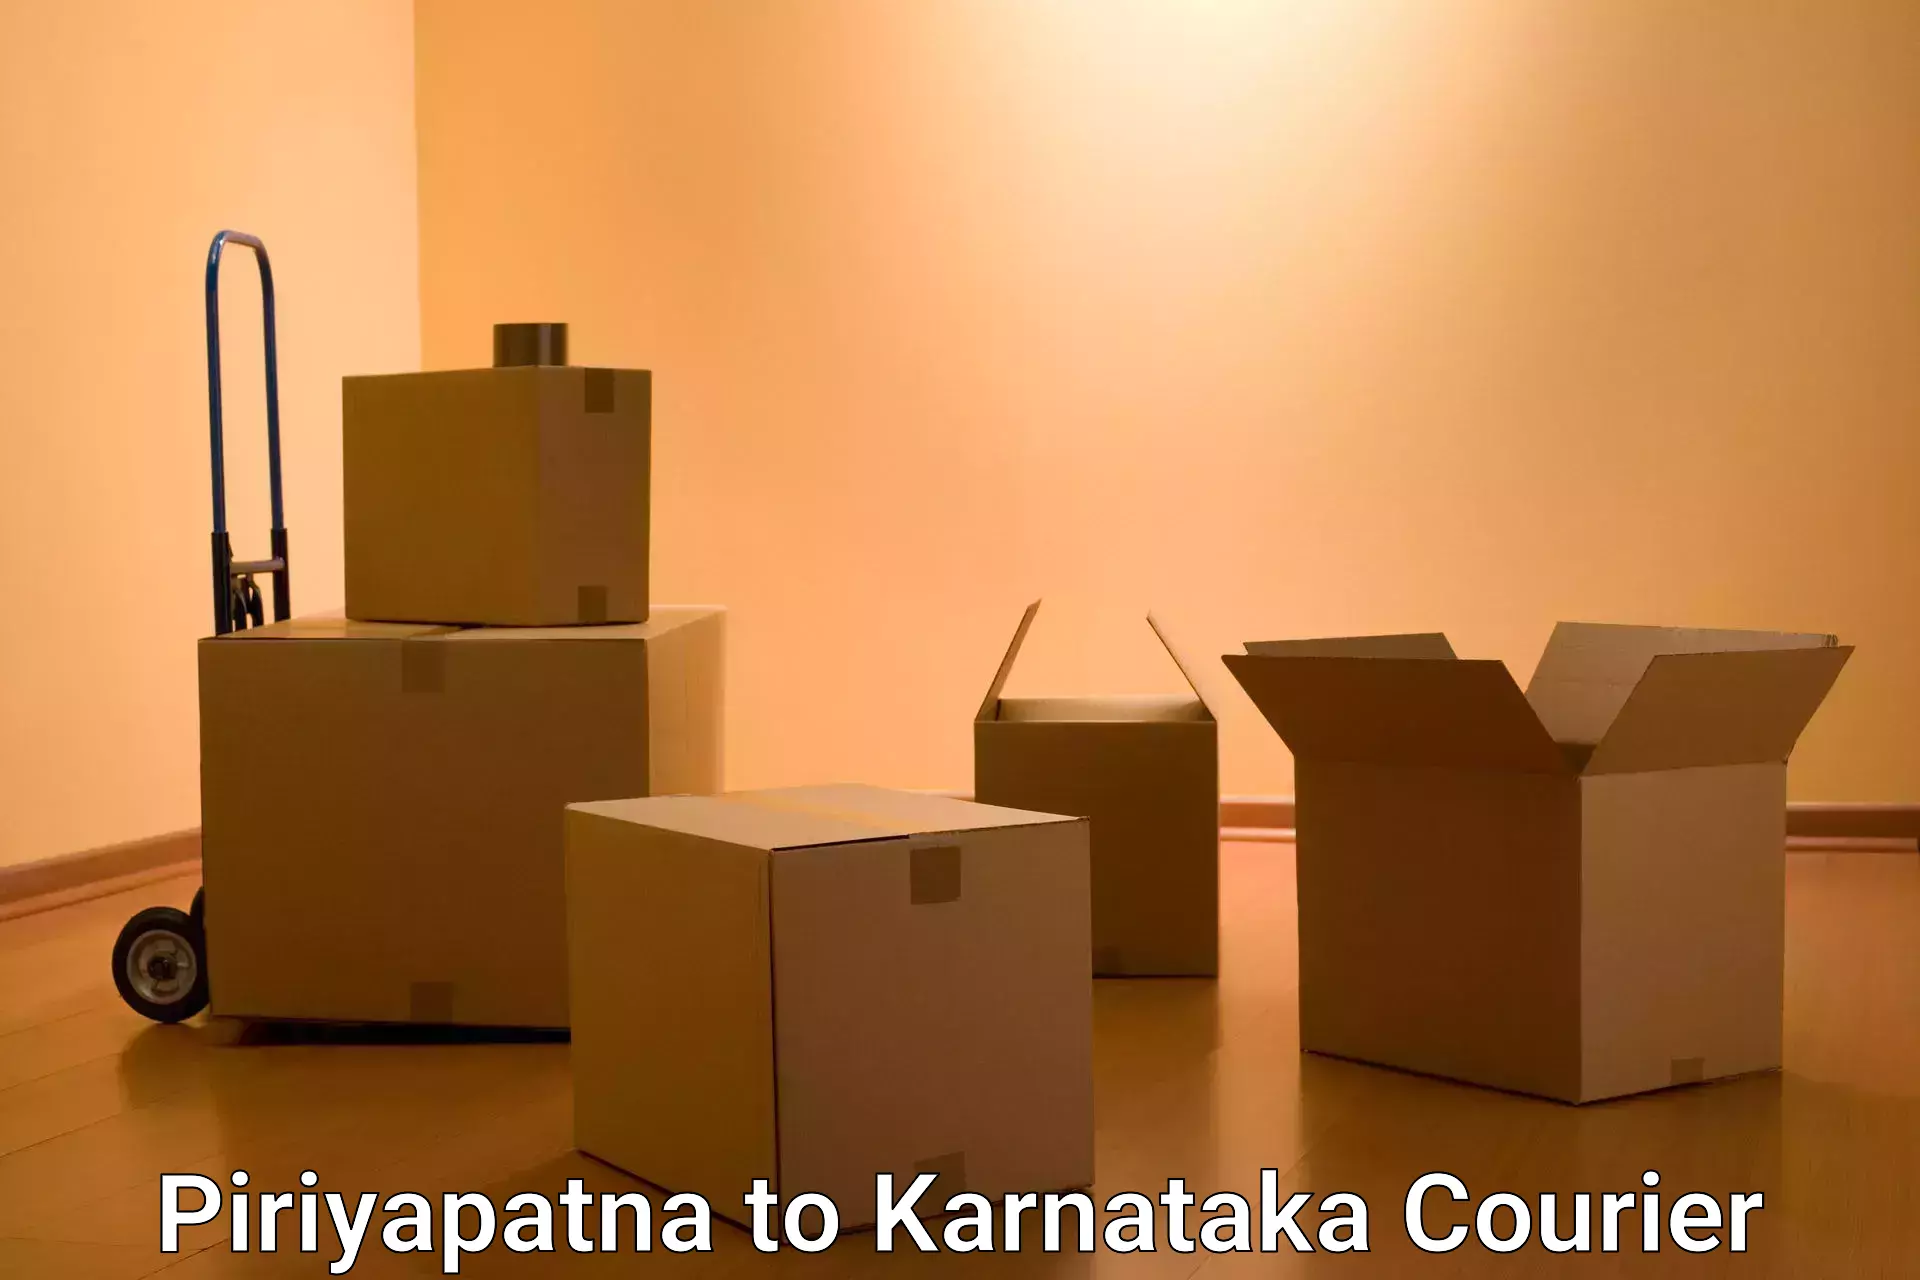 Express delivery capabilities Piriyapatna to Karnataka